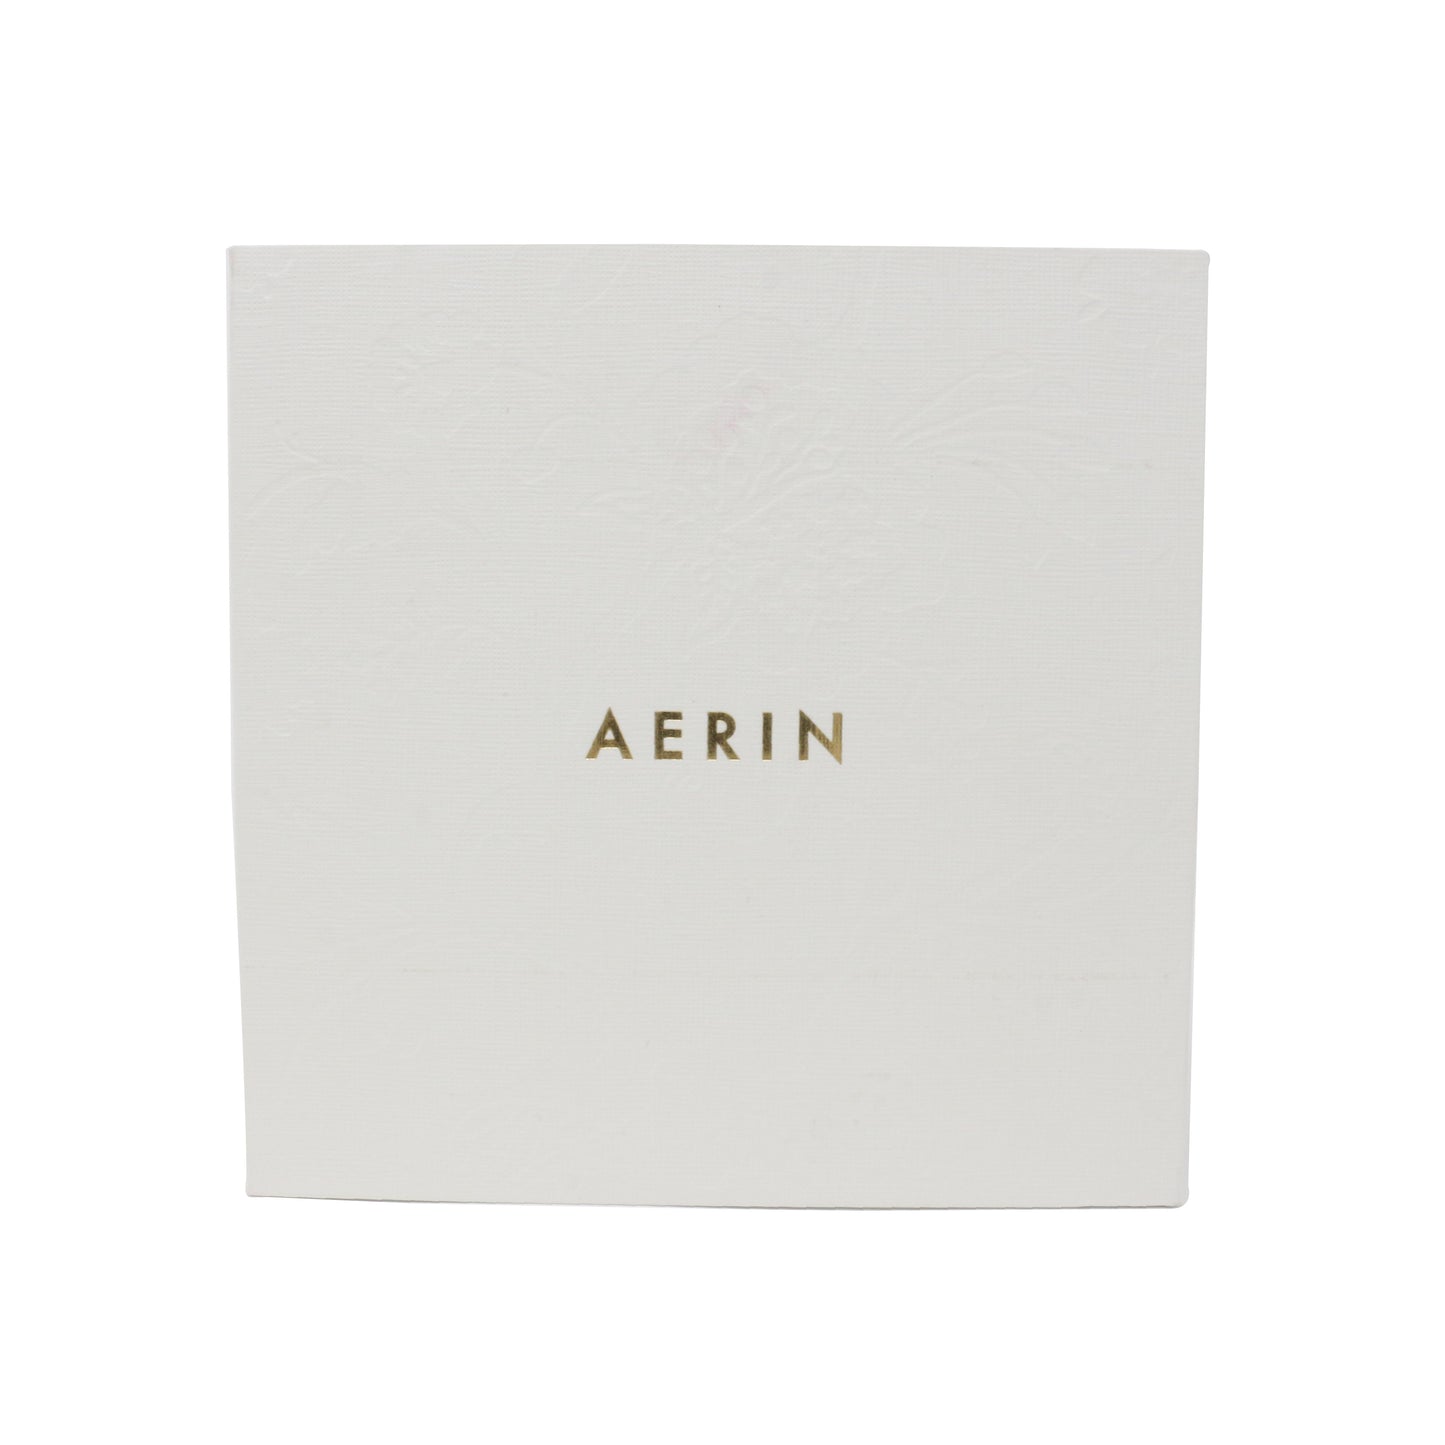 Aerin Rose De Grasse Solid Perfume Charm Bracelet & Necklace Compact Gift Set